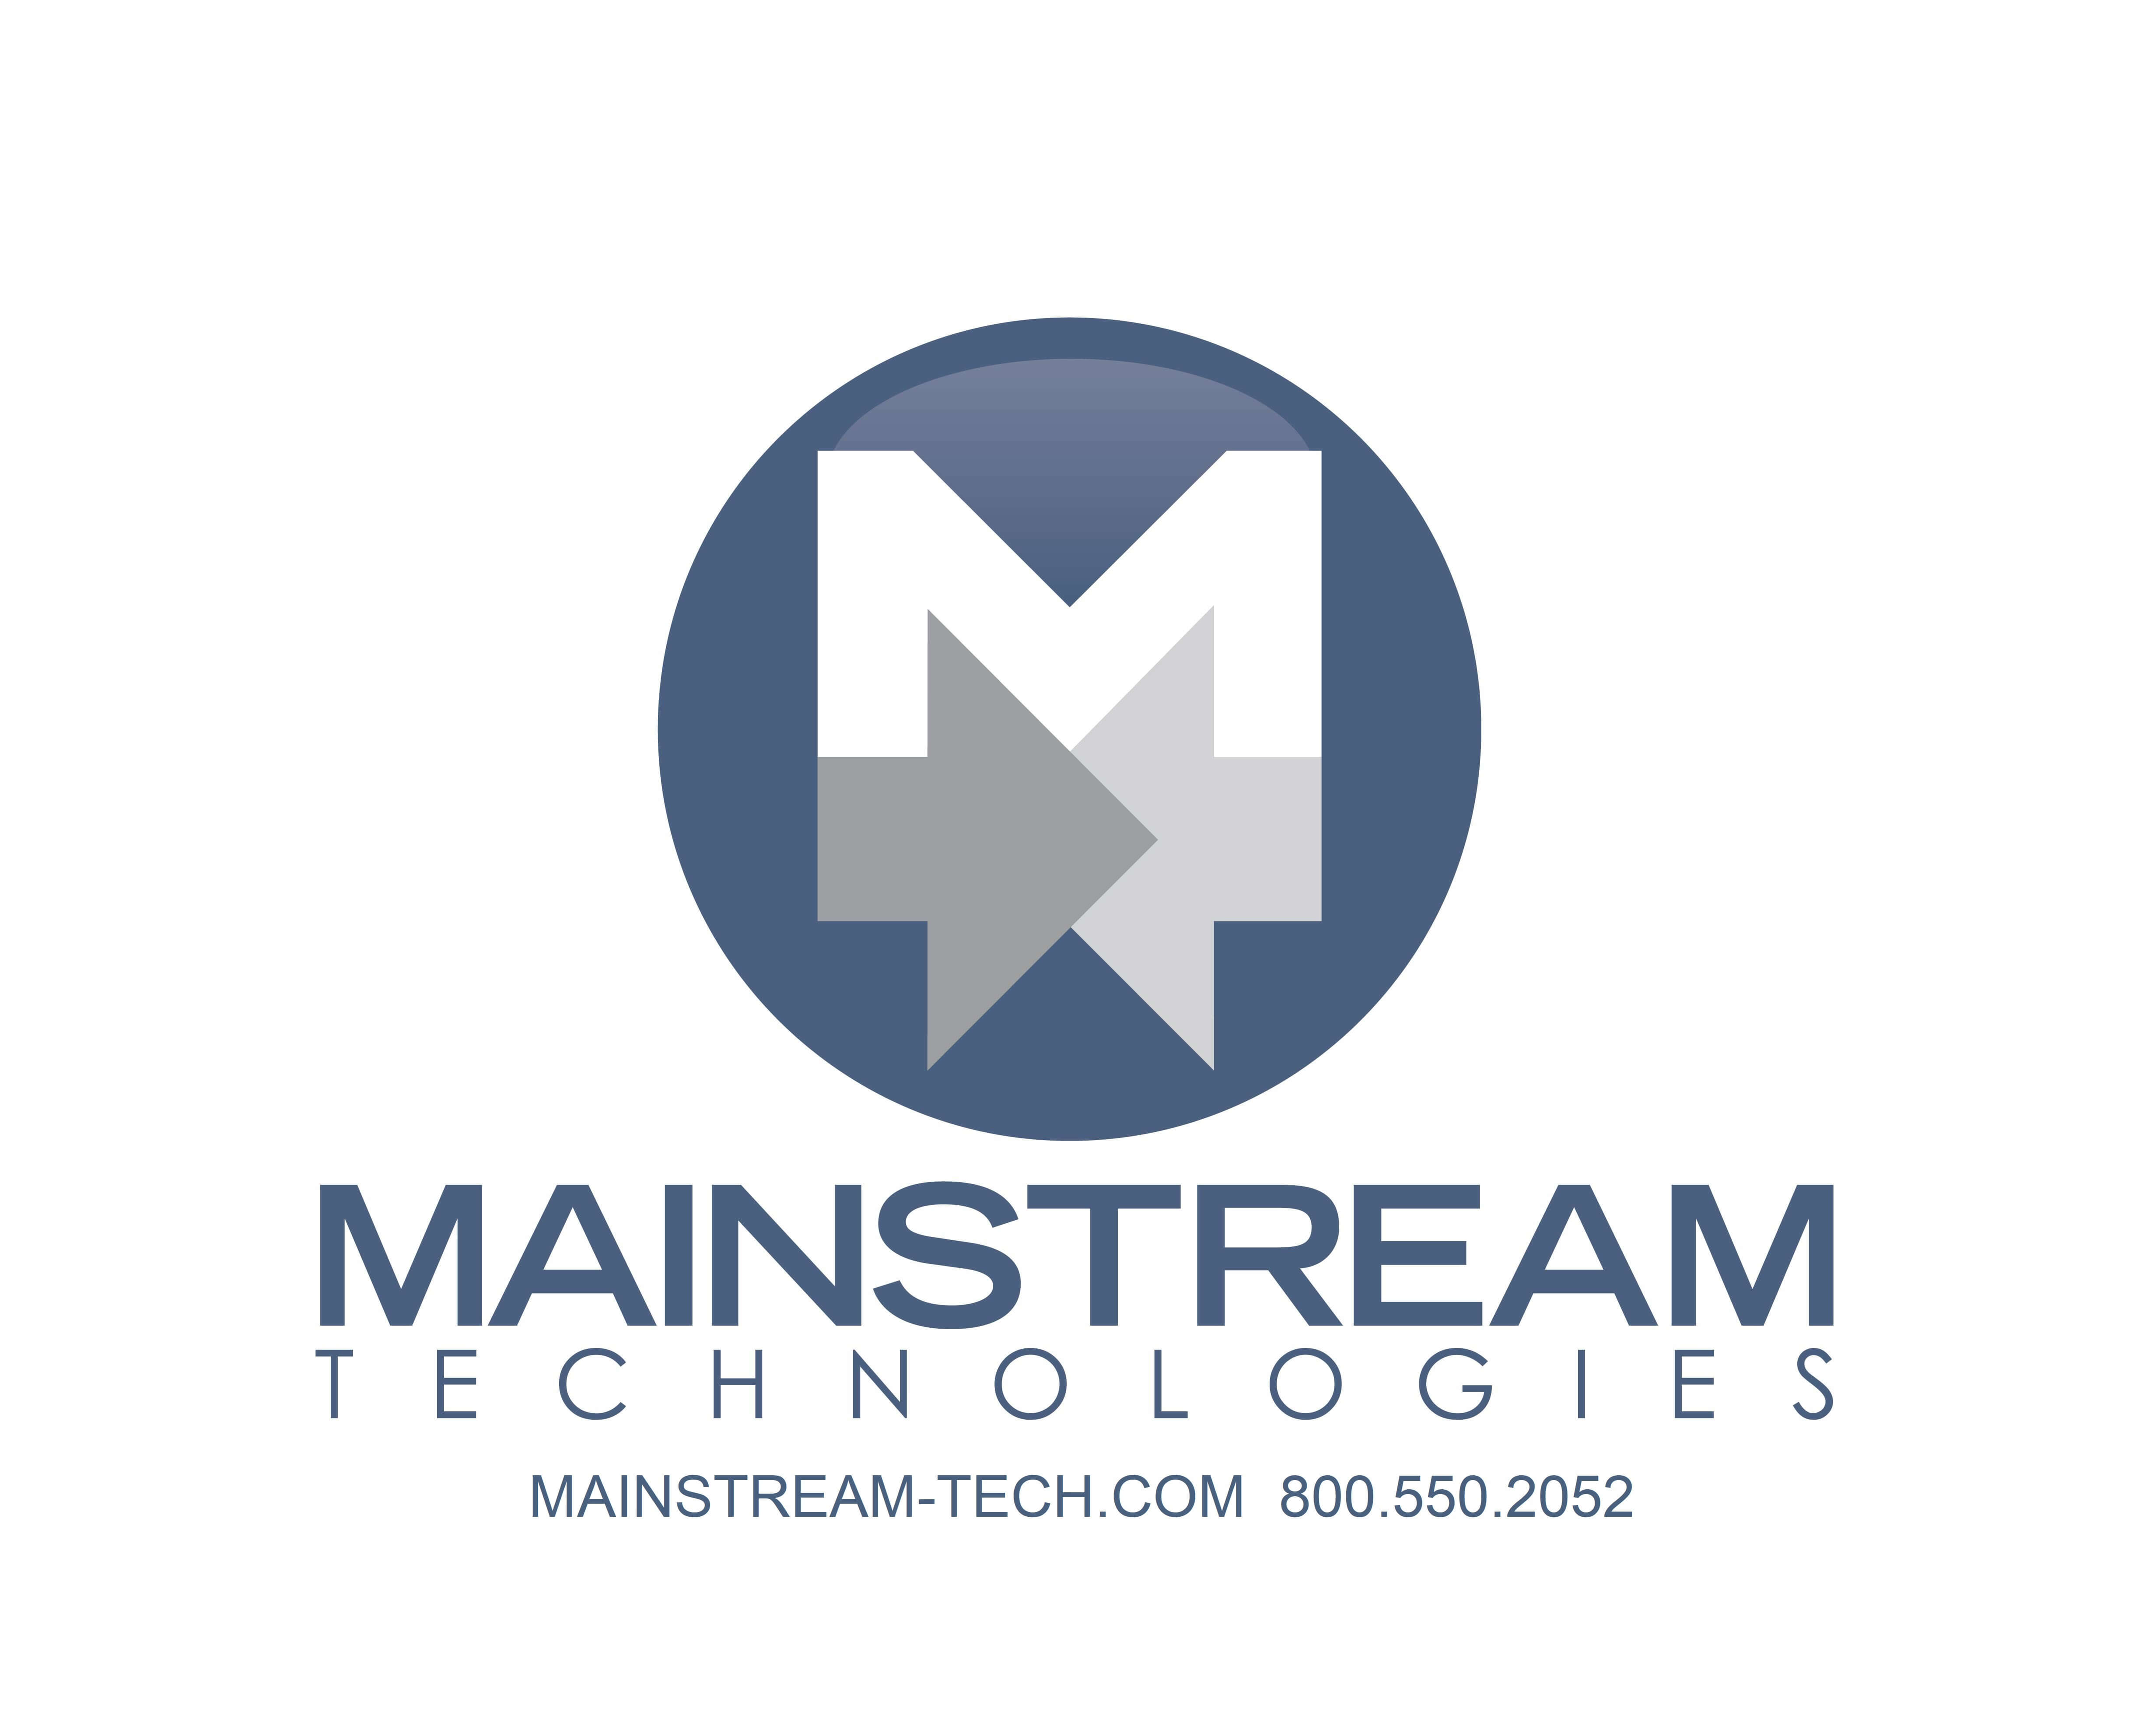 Mainstream Technologies